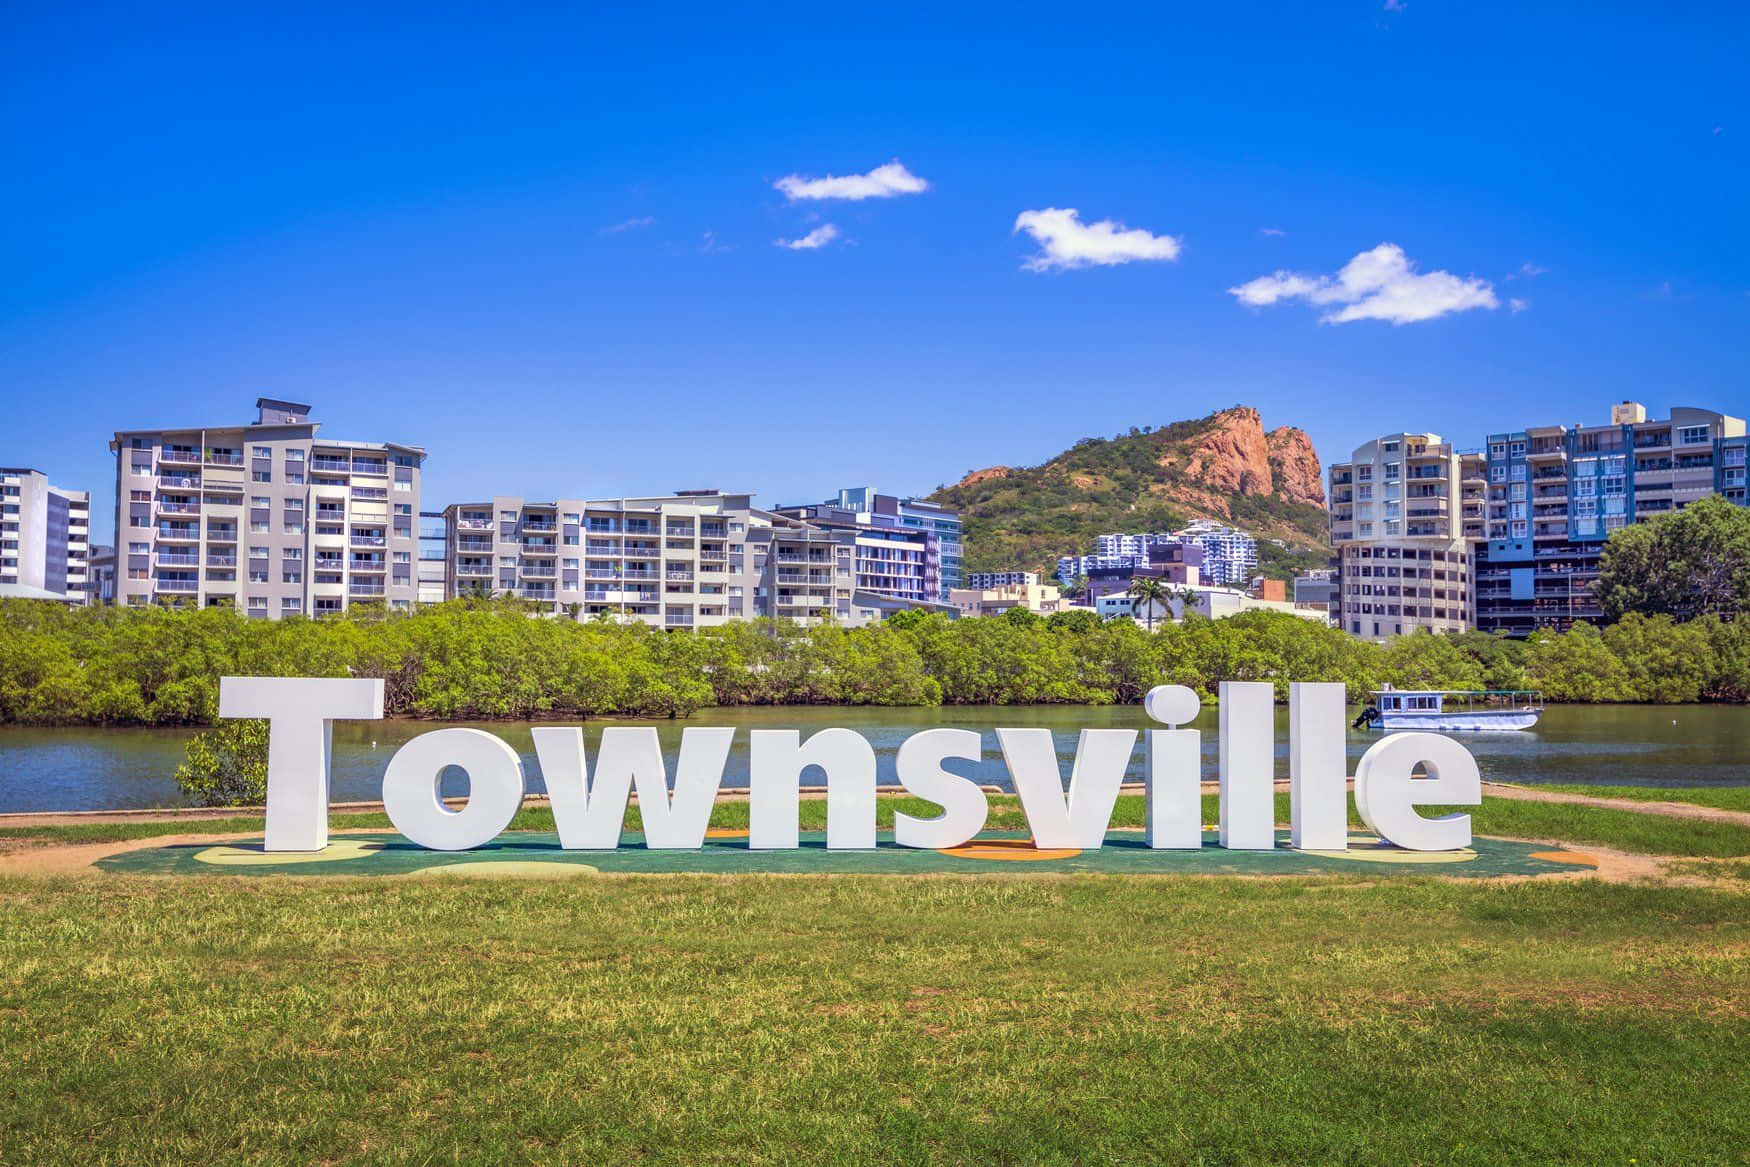 Townsville Signand Landscape Wallpaper